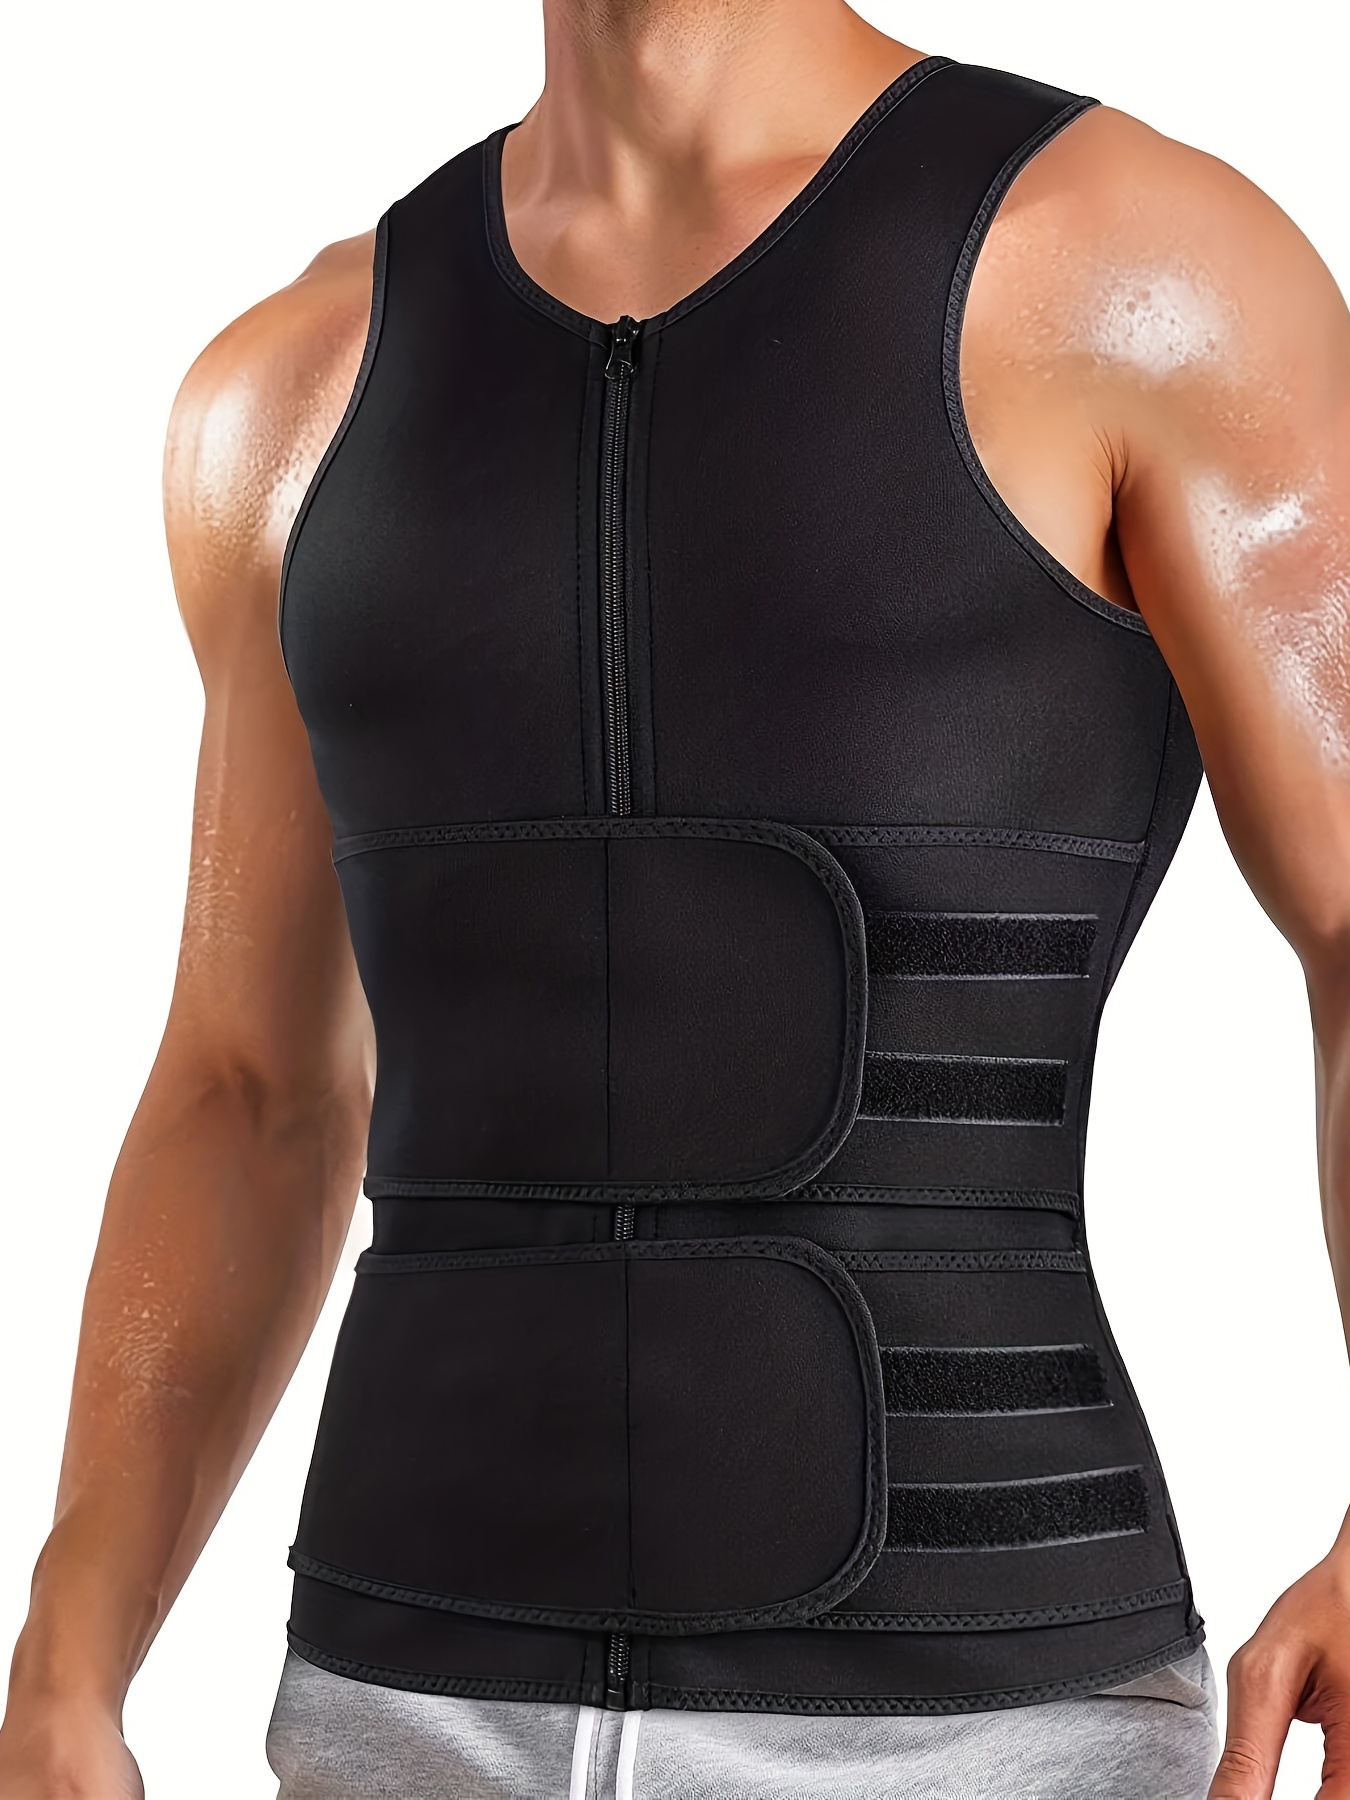 Sweat Sauna Vest For Men Heat Trapping Polymer Vest Sauna Suit Workout Tank  Top Pullover Waist Trainer Shirt Body